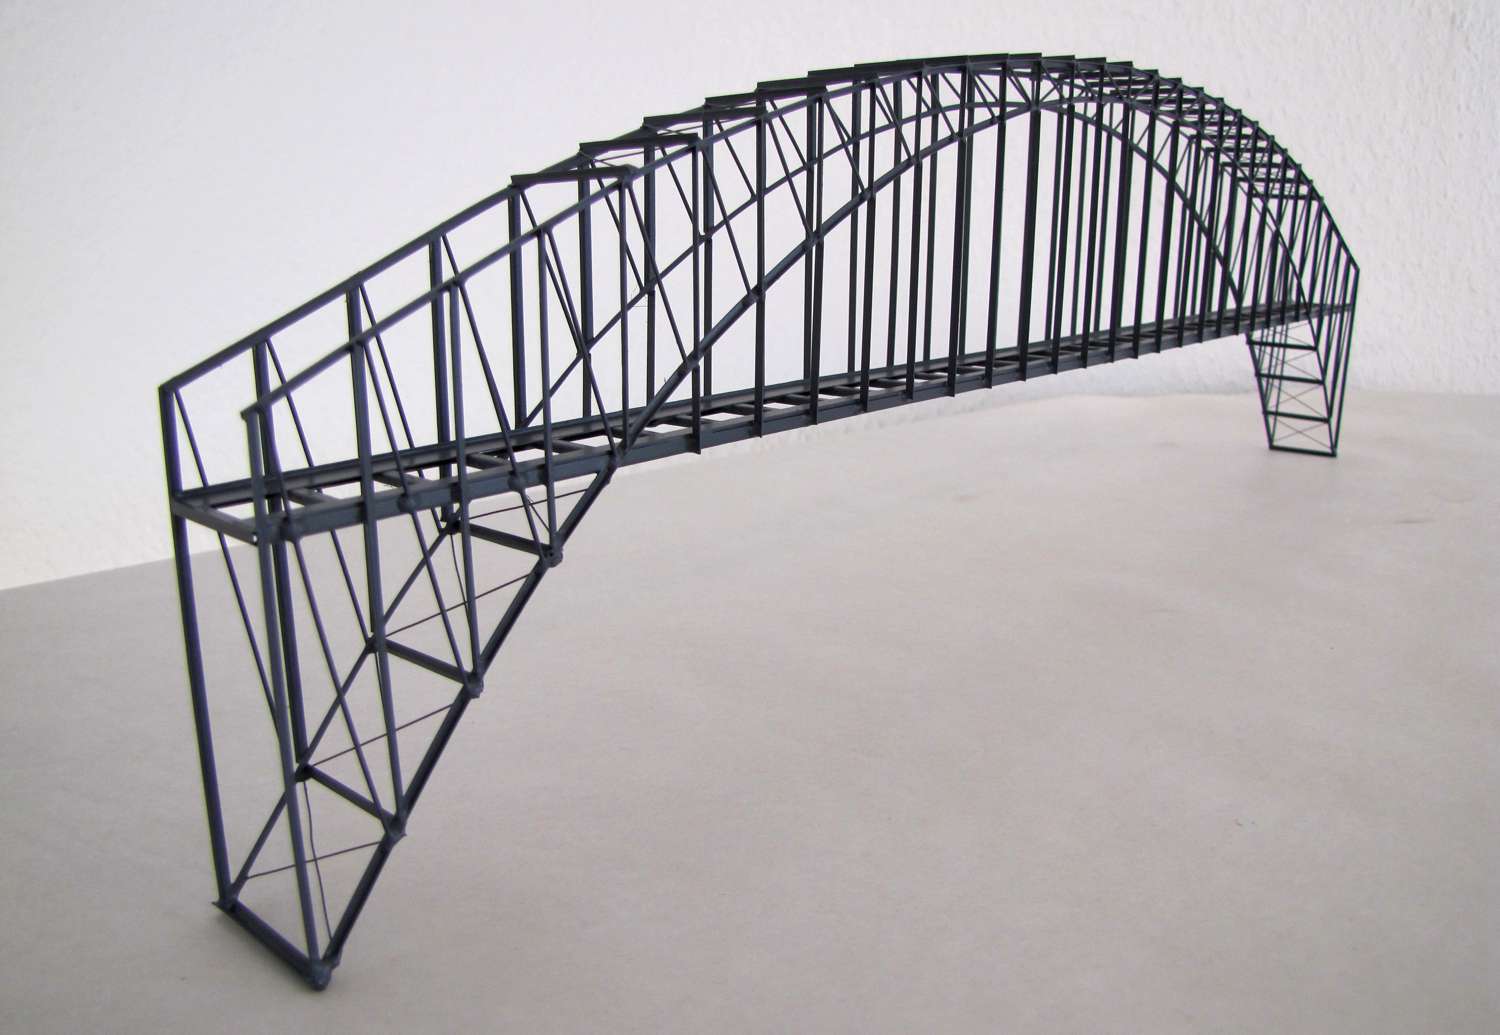 Hack 23140 - BN50 - Bogenbrücke 50cm, 1-gleisig, grau